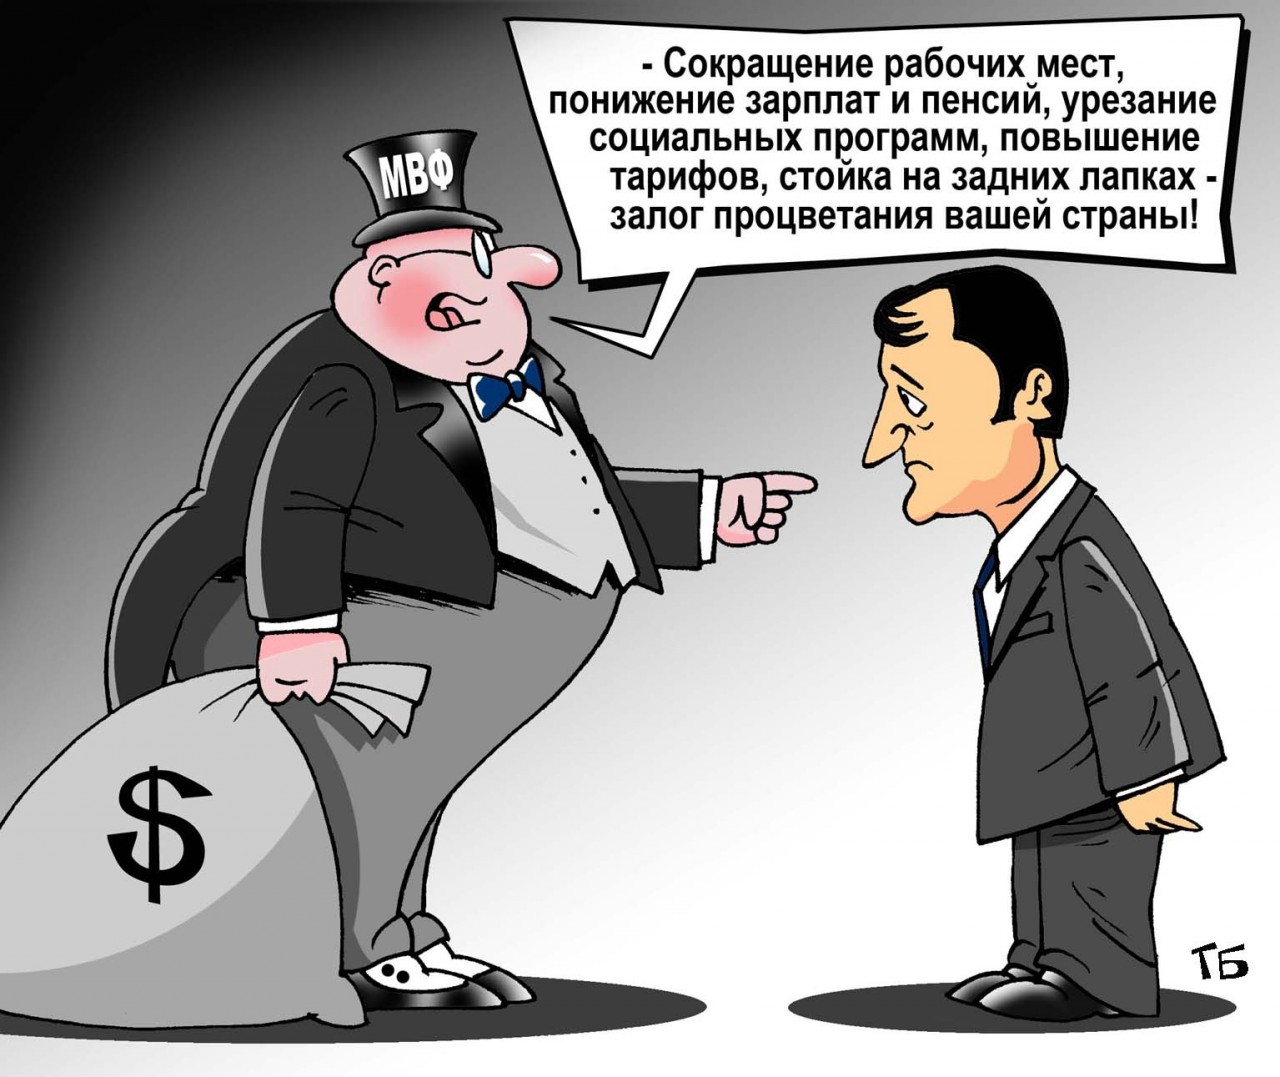 Мвф аббревиатура. Международный валютный фонд карикатуры. МВФ карикатура. Украина и МВФ карикатуры. МВФ прикол.